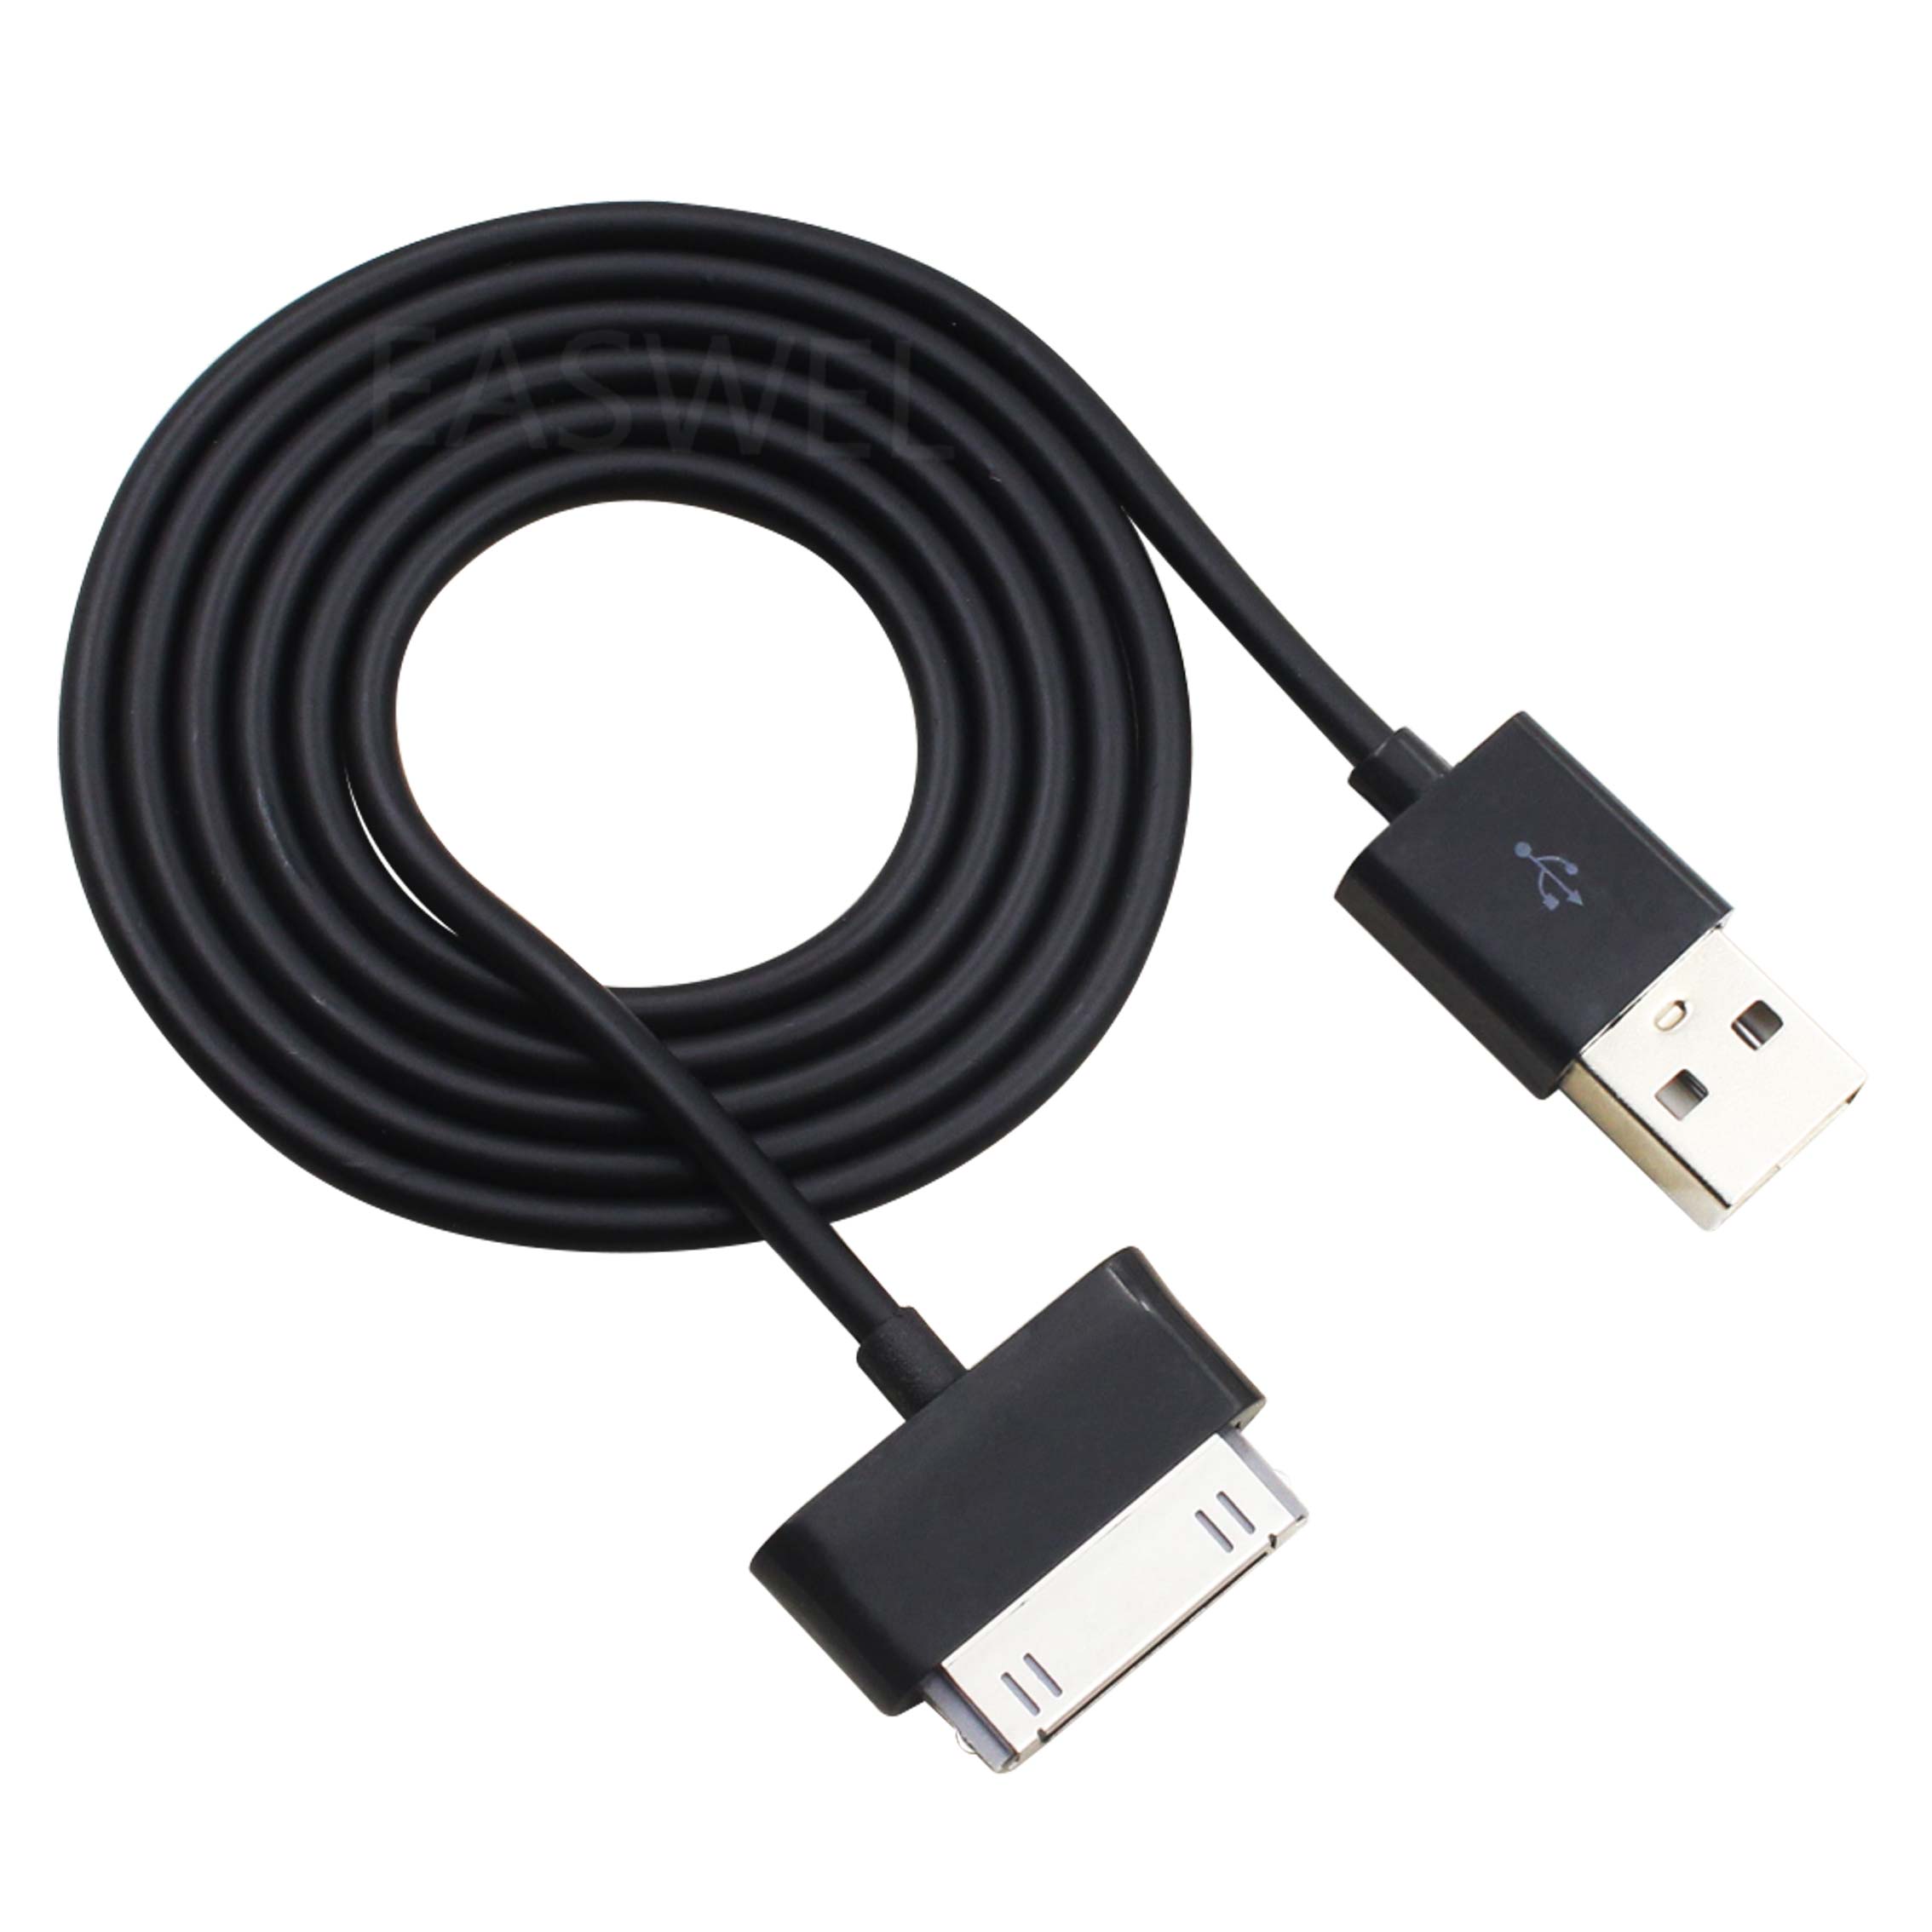 USB Datakabel Cord Oplader voor Samsung Galaxy Tab 2 7.0 GT-P3113 Tablet